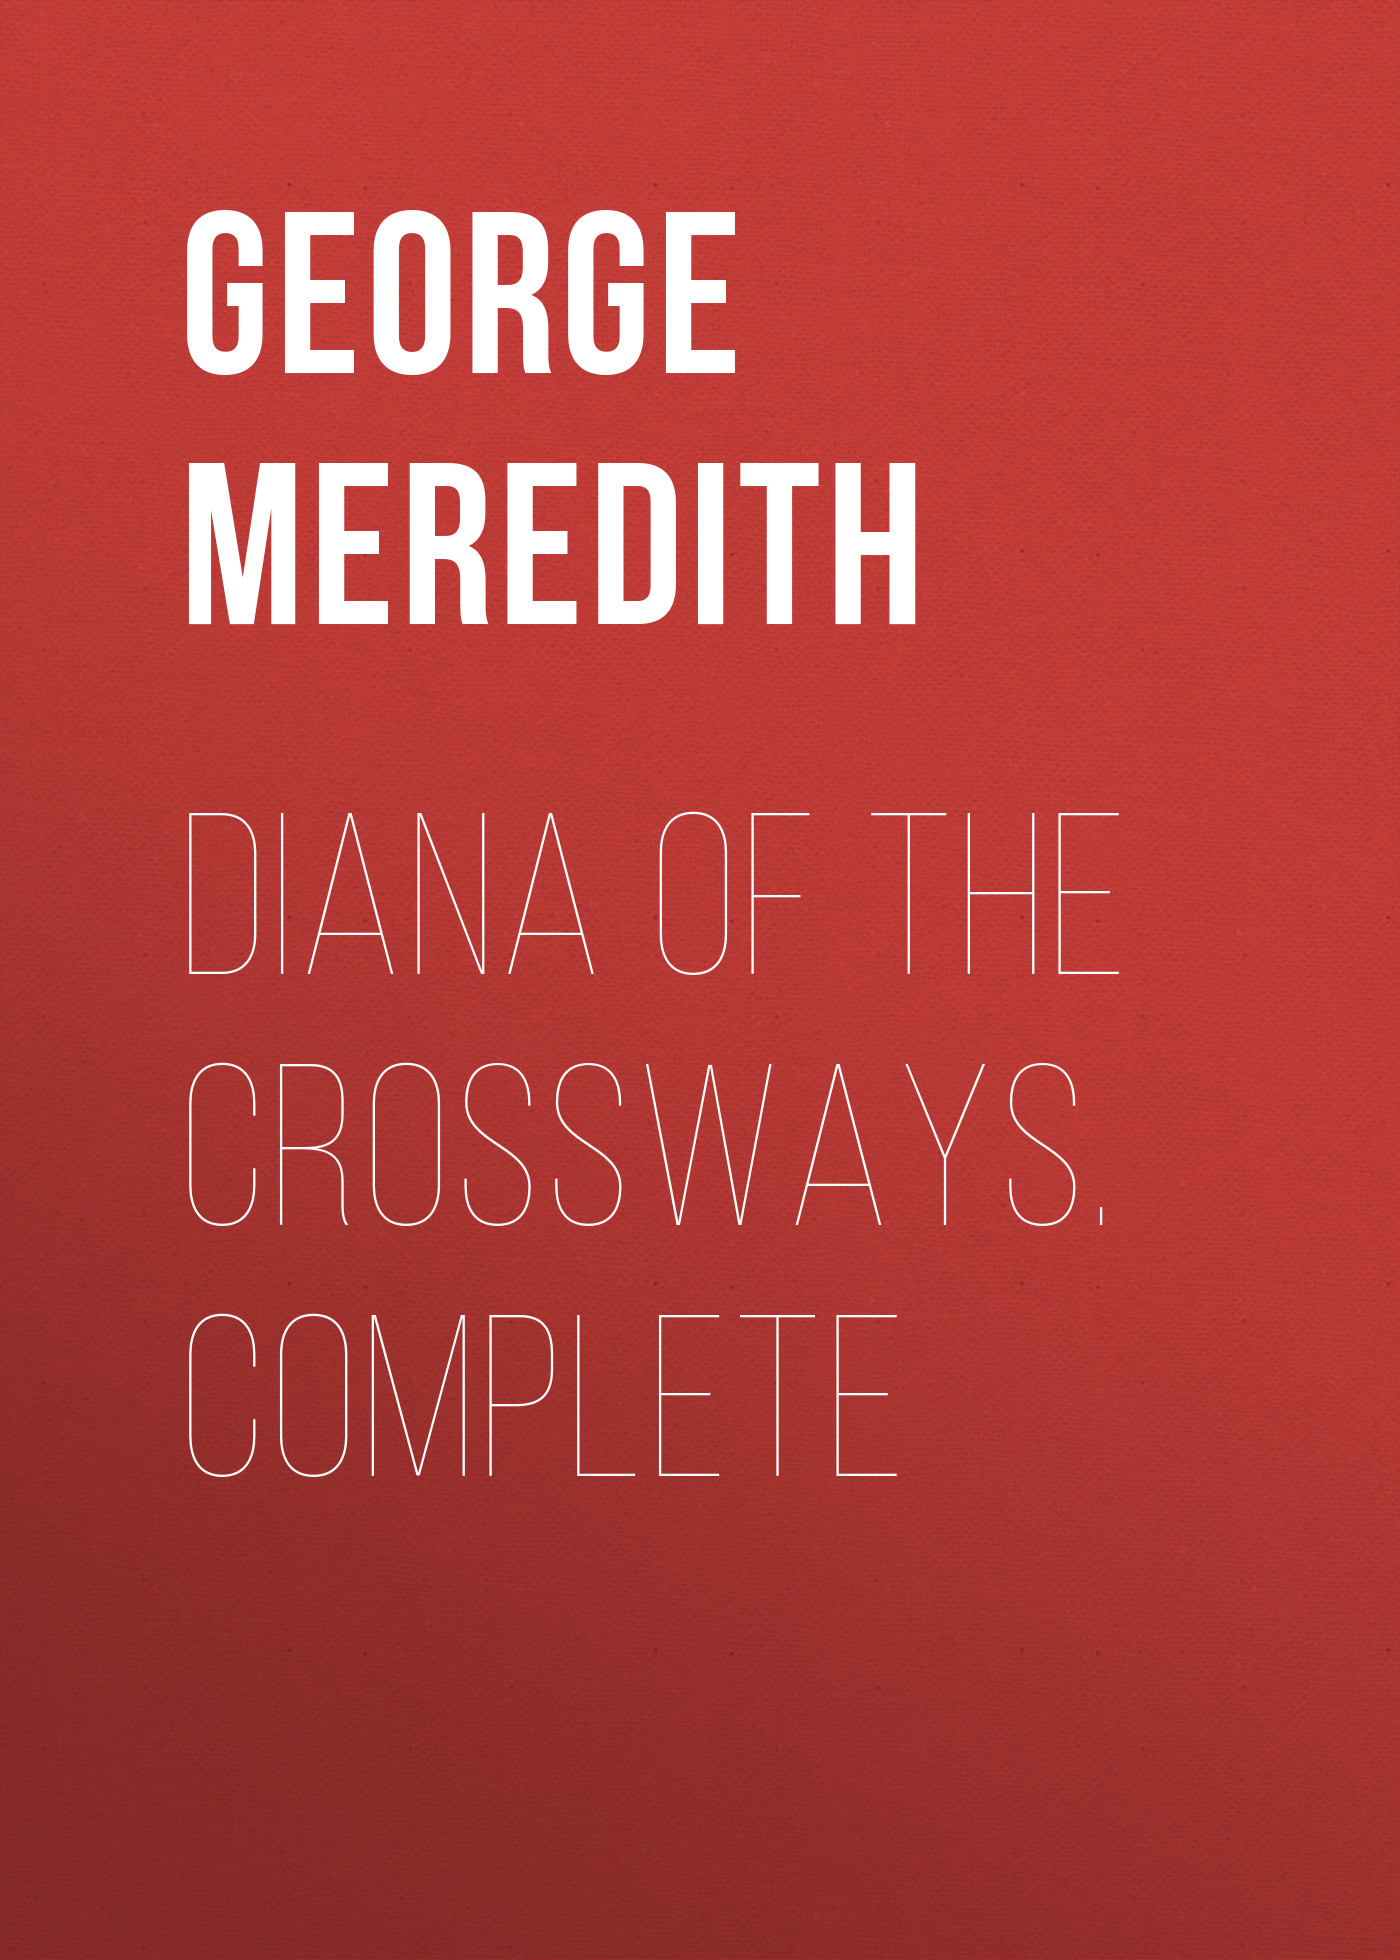 Diana of the Crossways. Complete